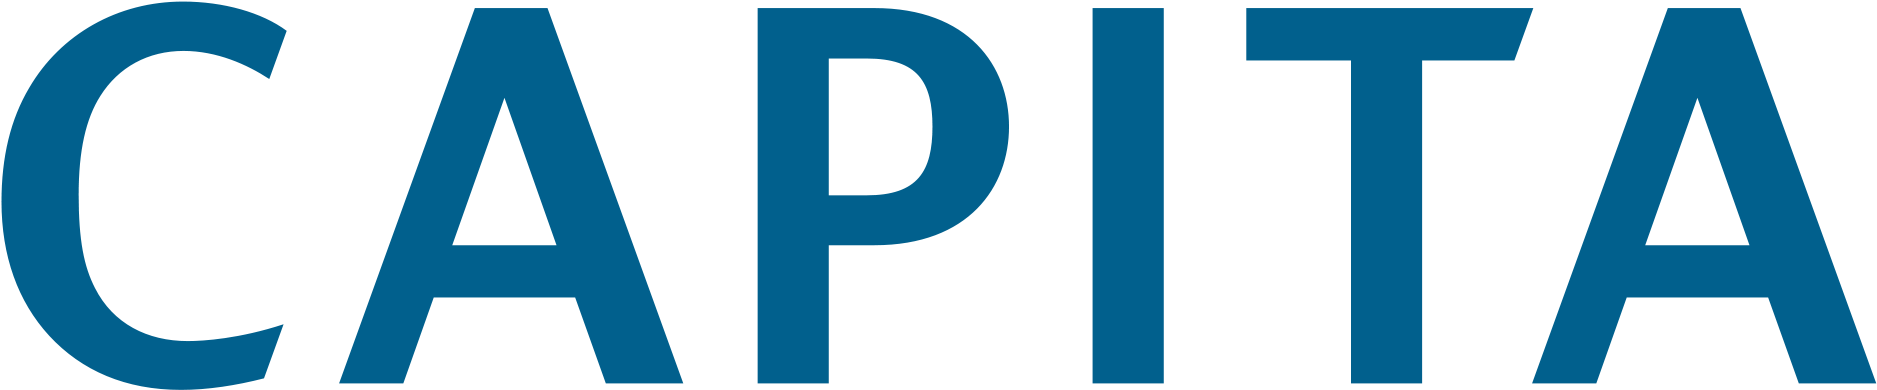 Capita Logo Png (2000x513), Png Download